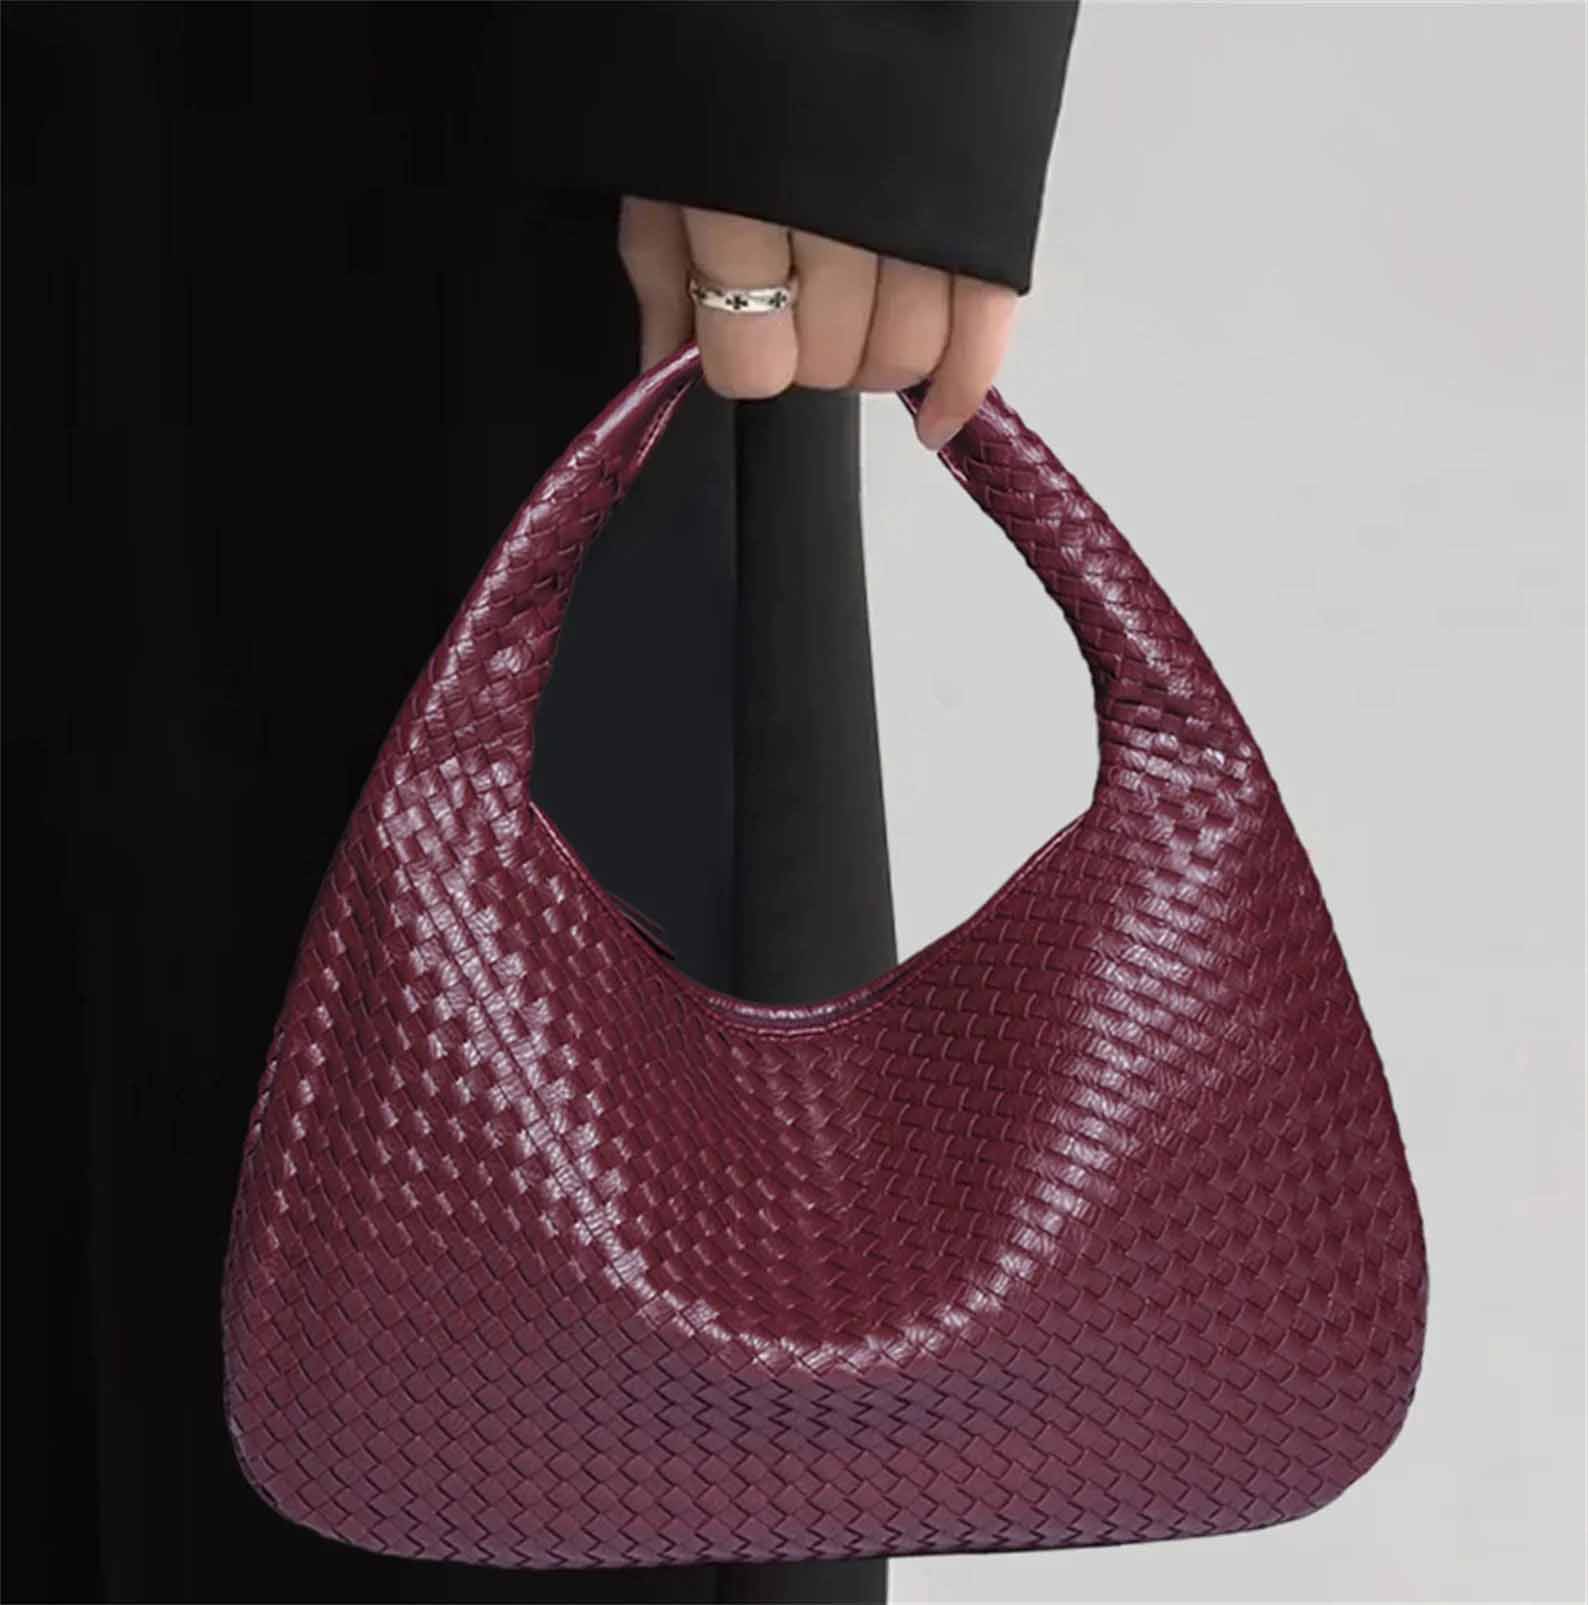 Modern Gift Idea - A Leather Woven Bag